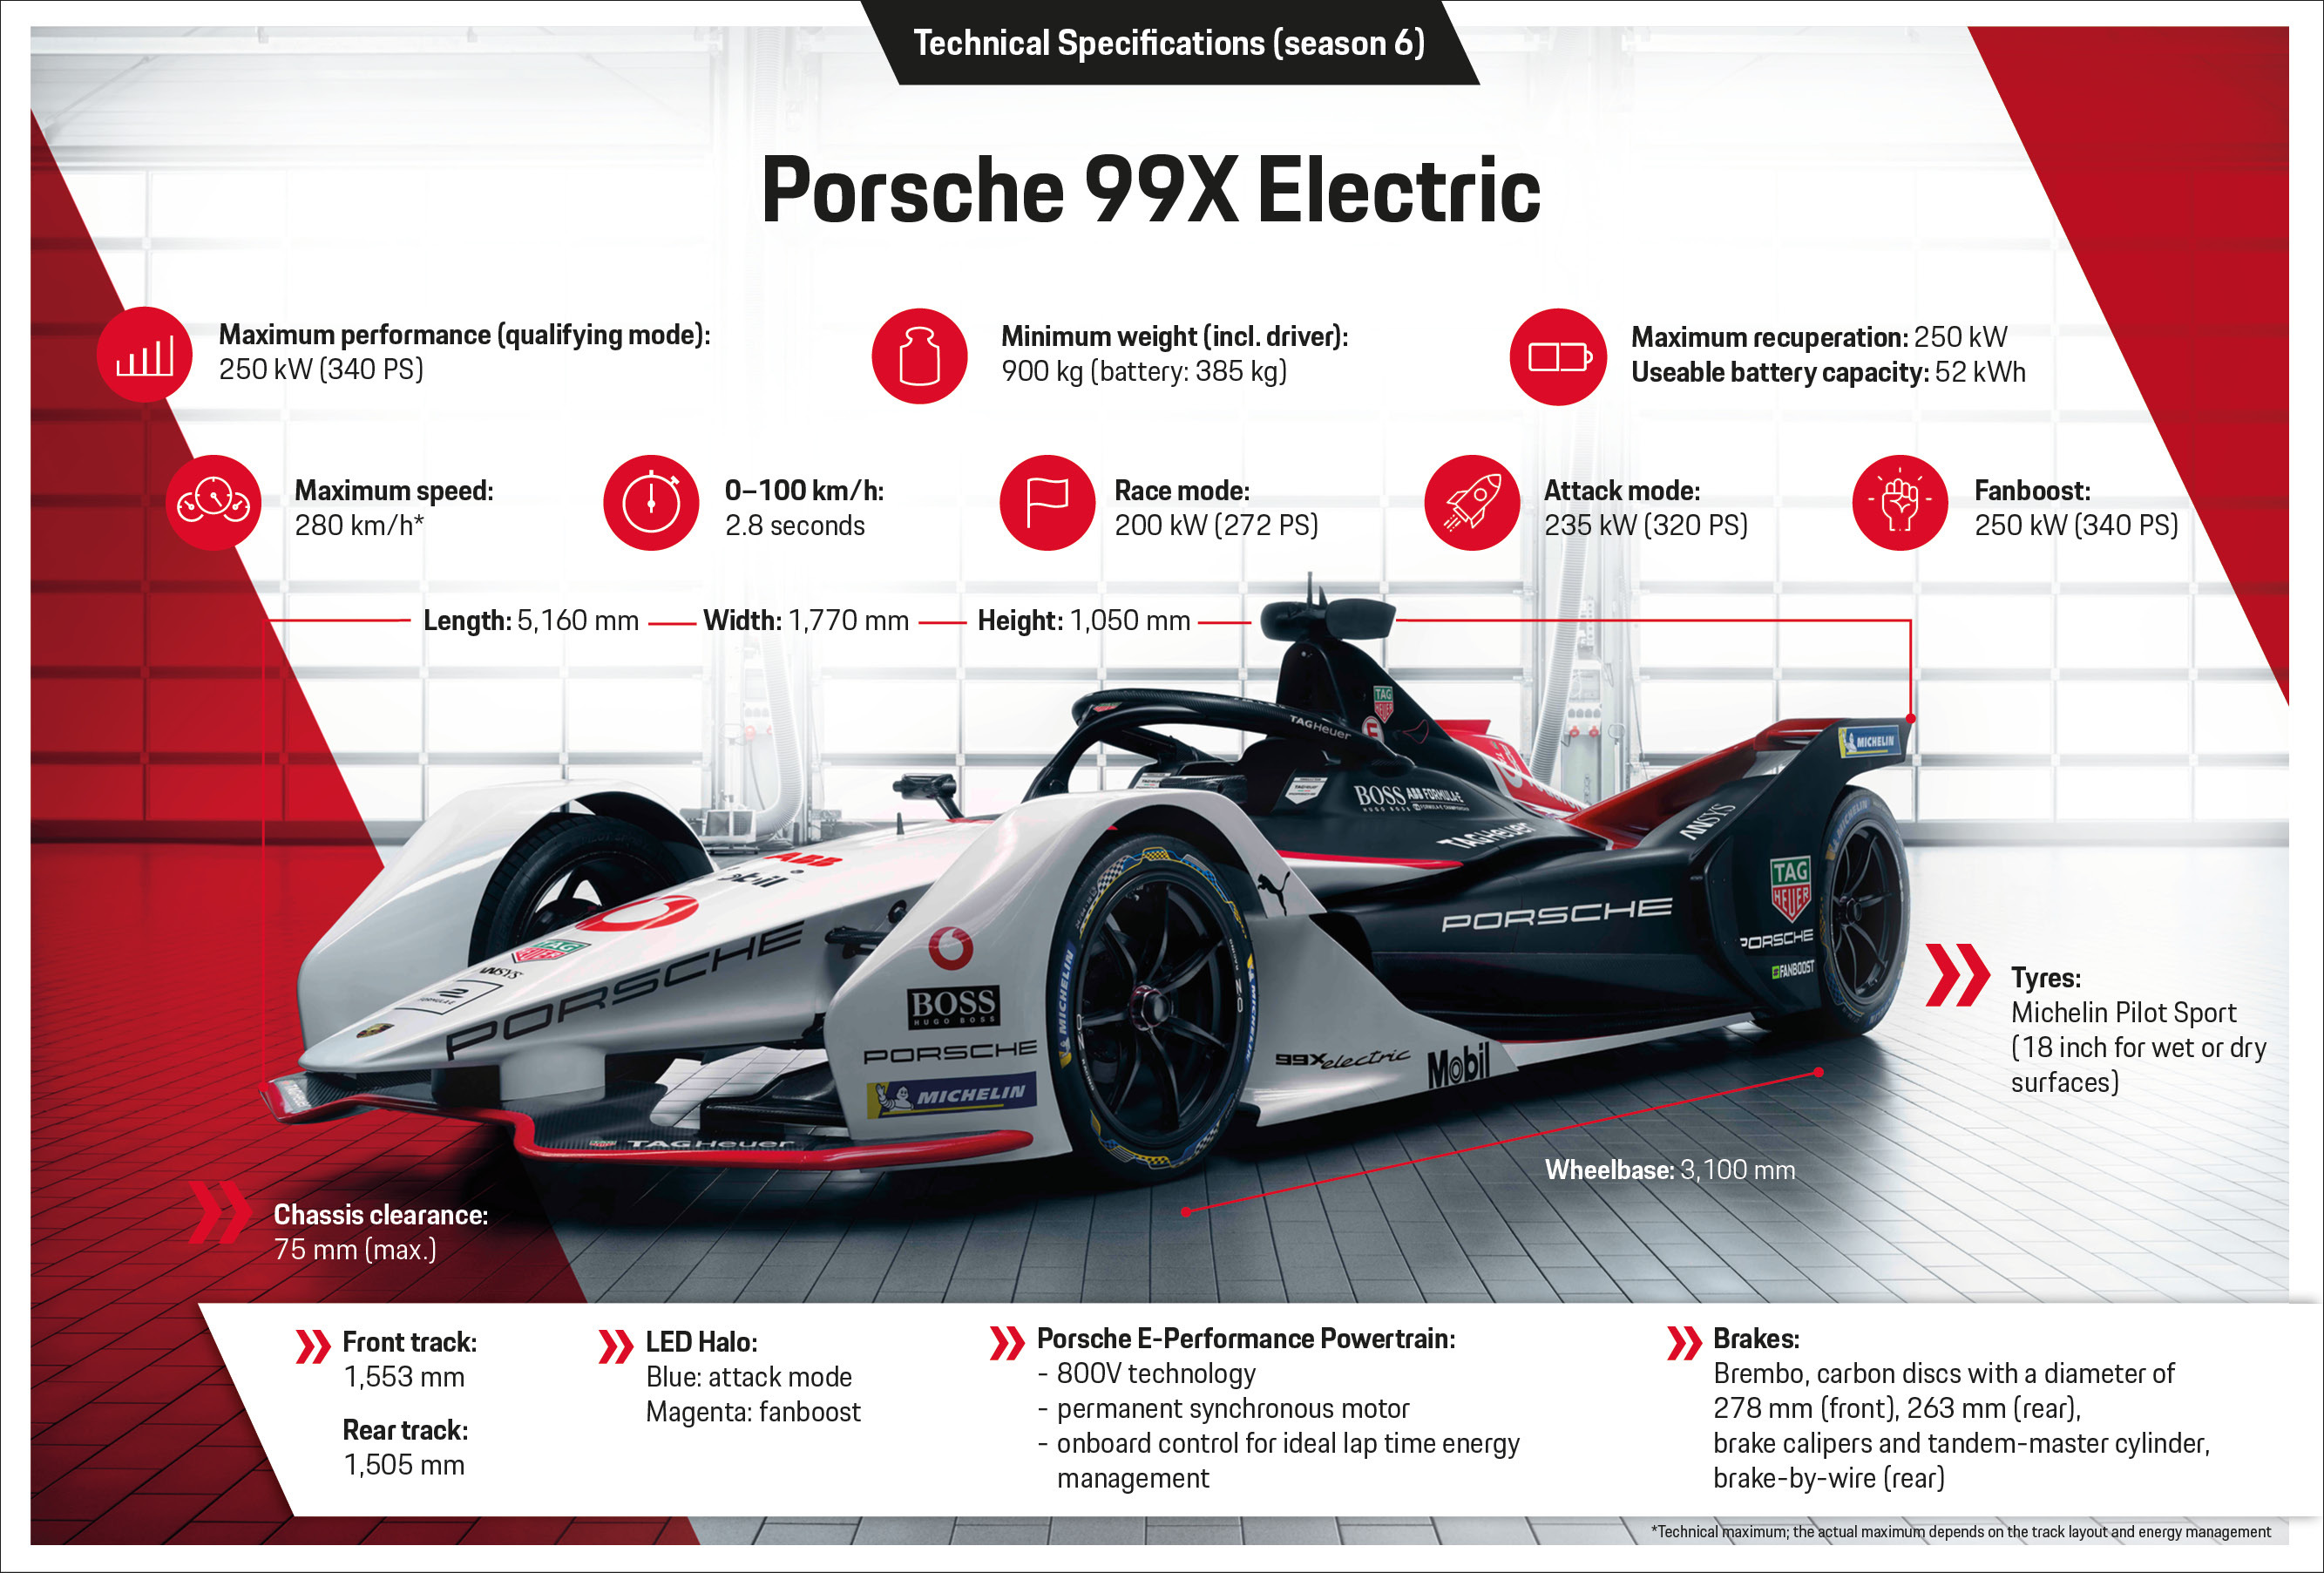 Porsche 99X Electric, technical specifications (season 6), infographic, 2020, Porsche AG